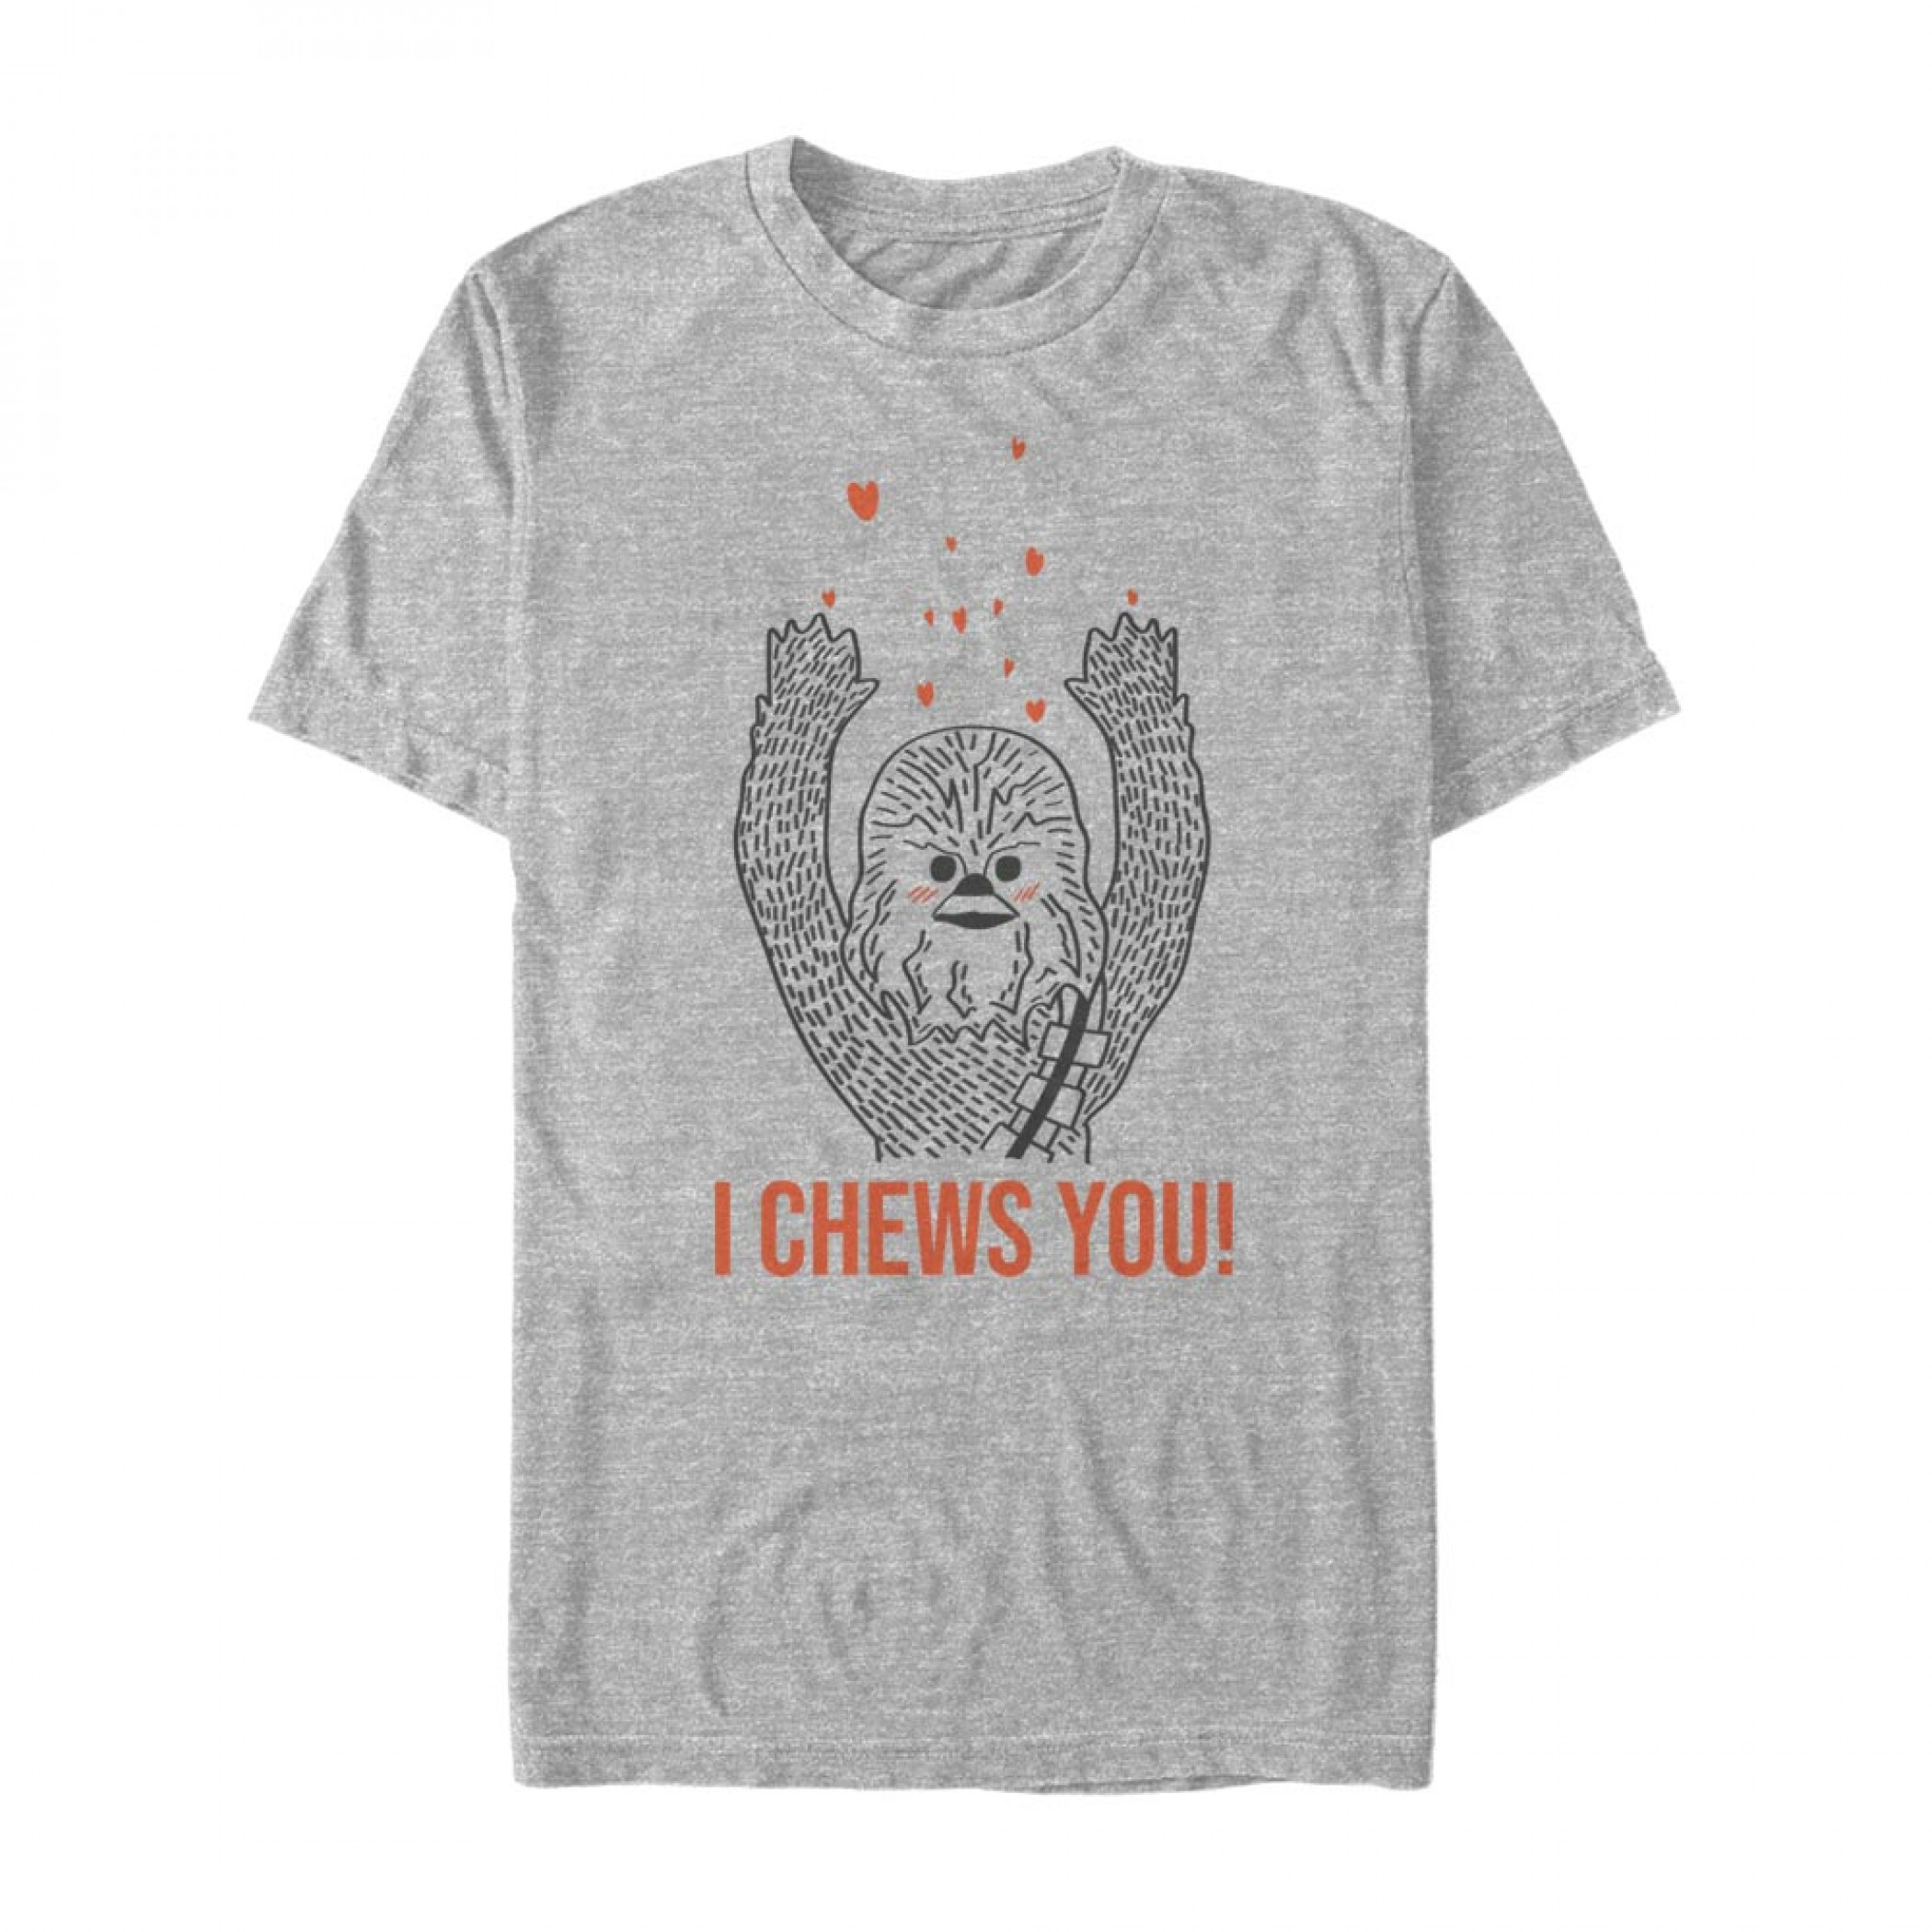 Star Wars I Chews You Grey T-Shirt